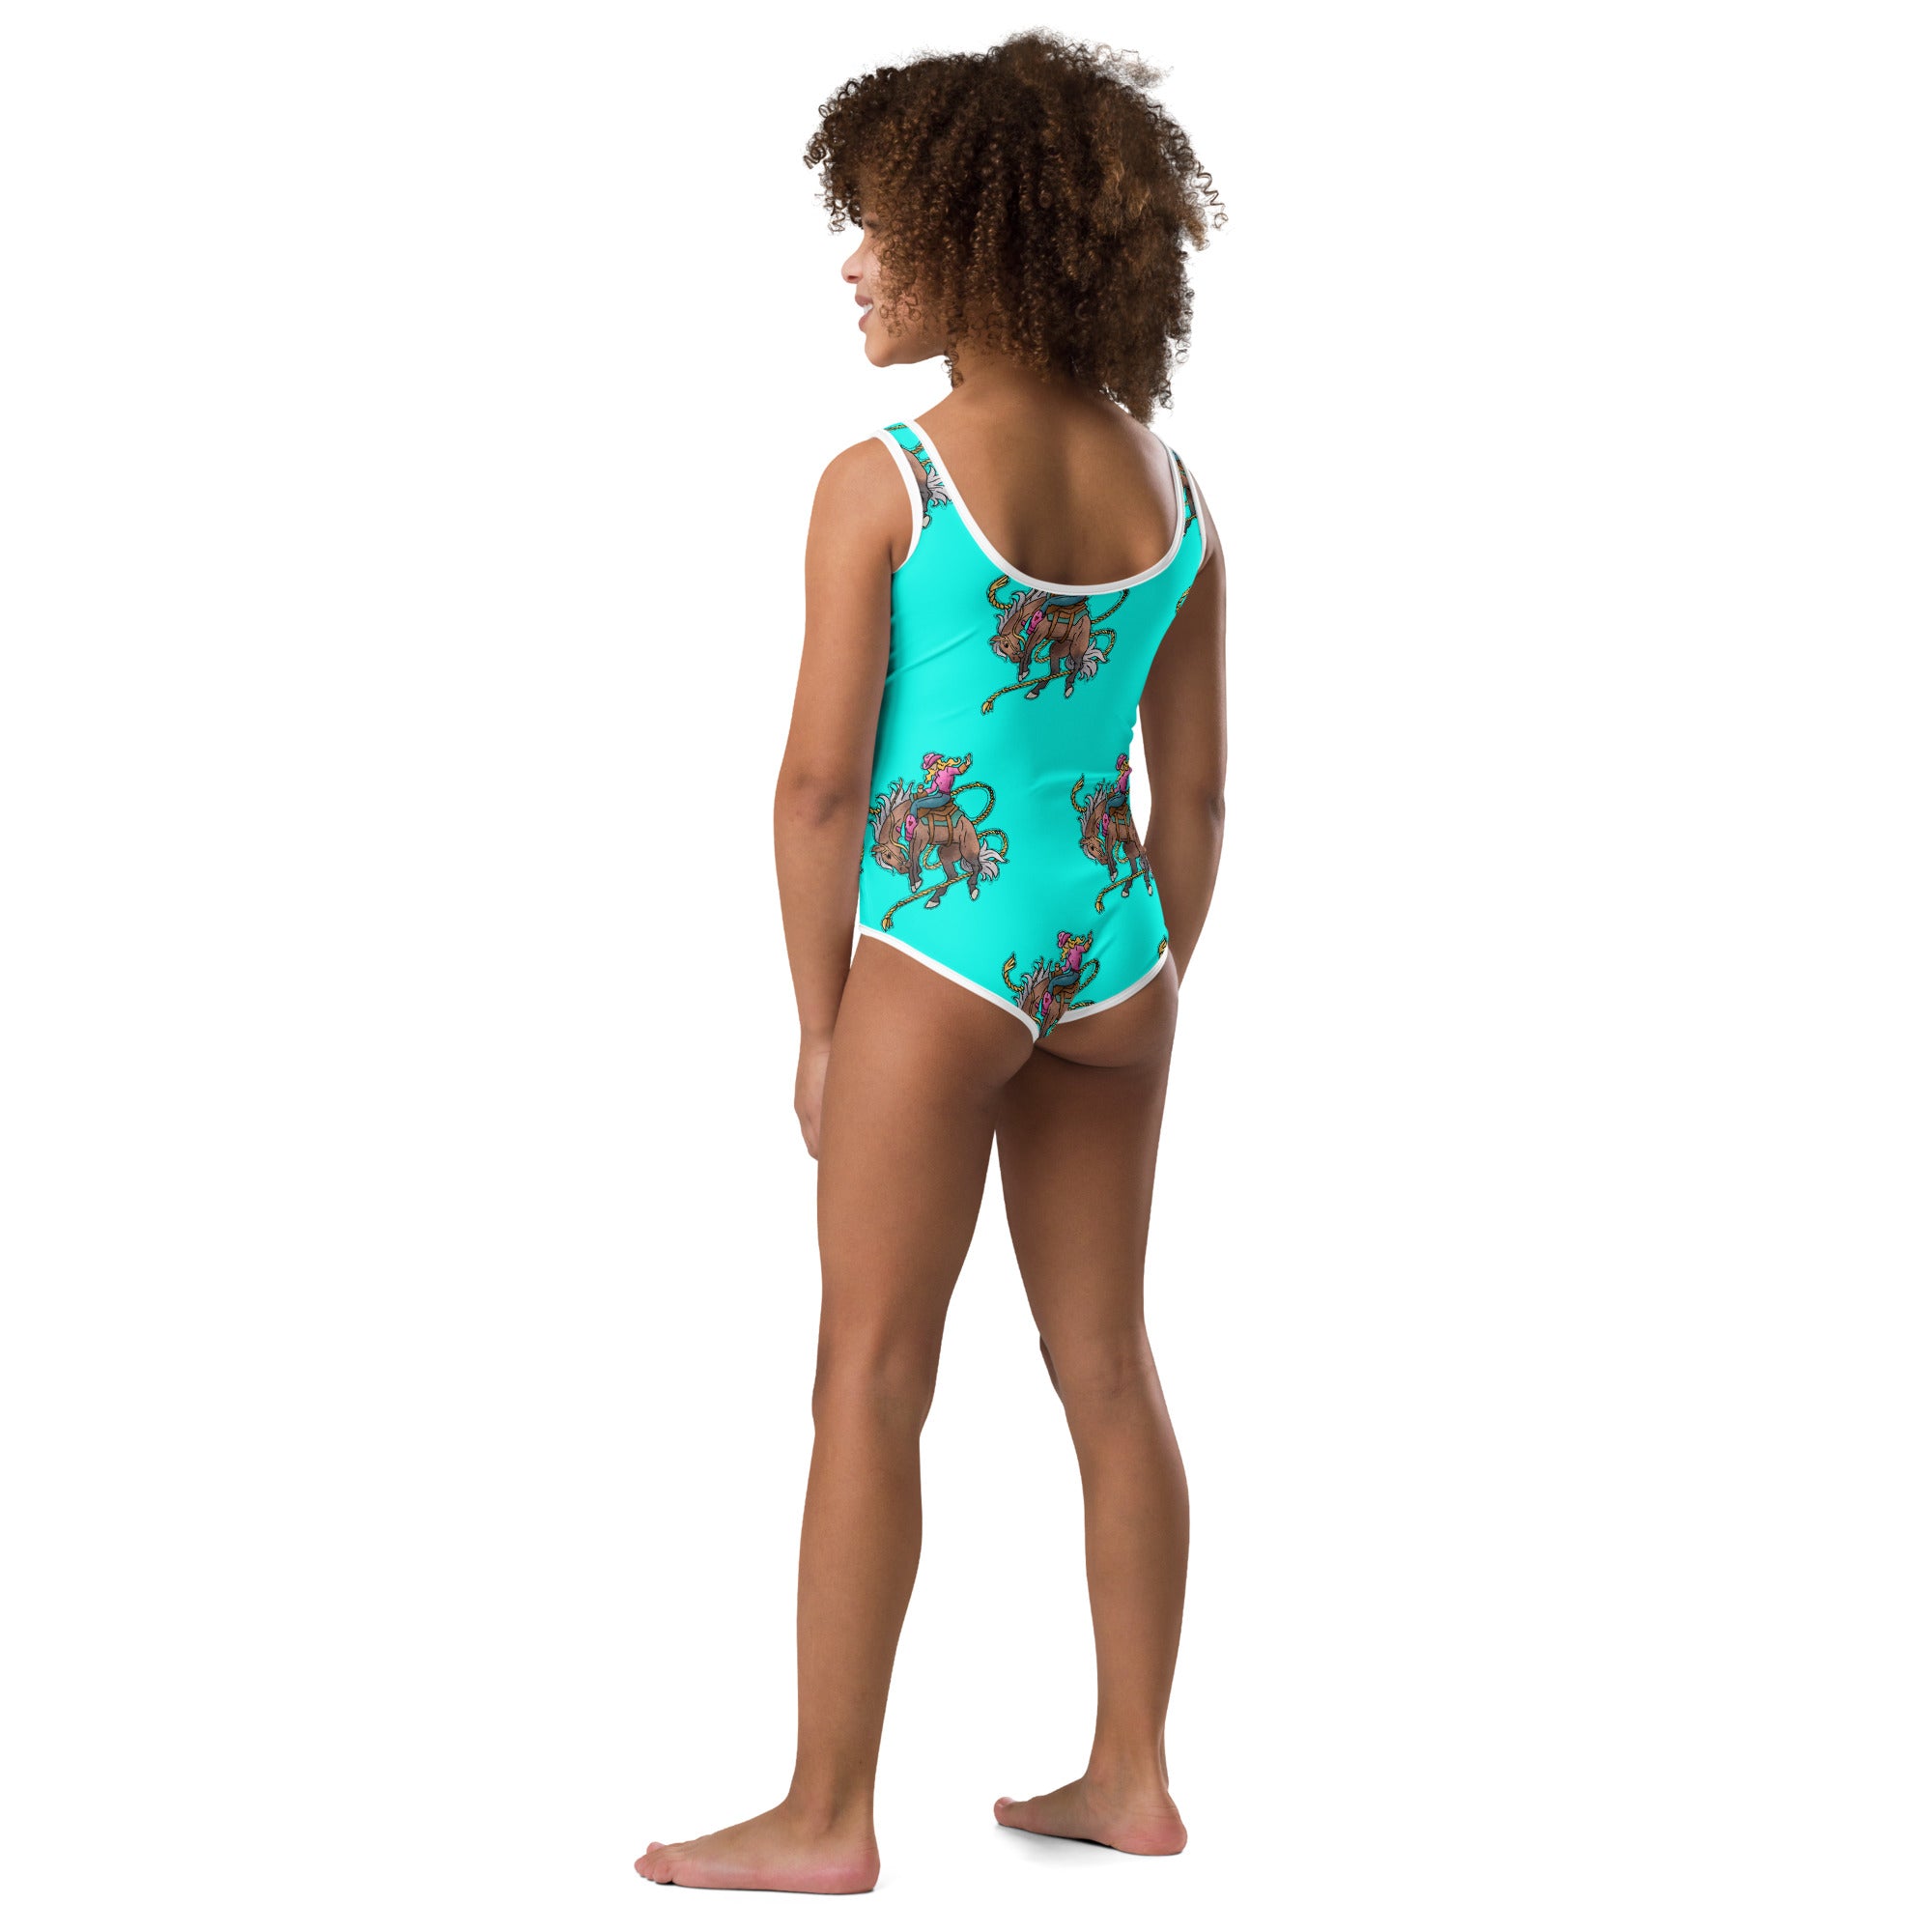 Turquoise Bronc Child Swimsuit (2T-7)